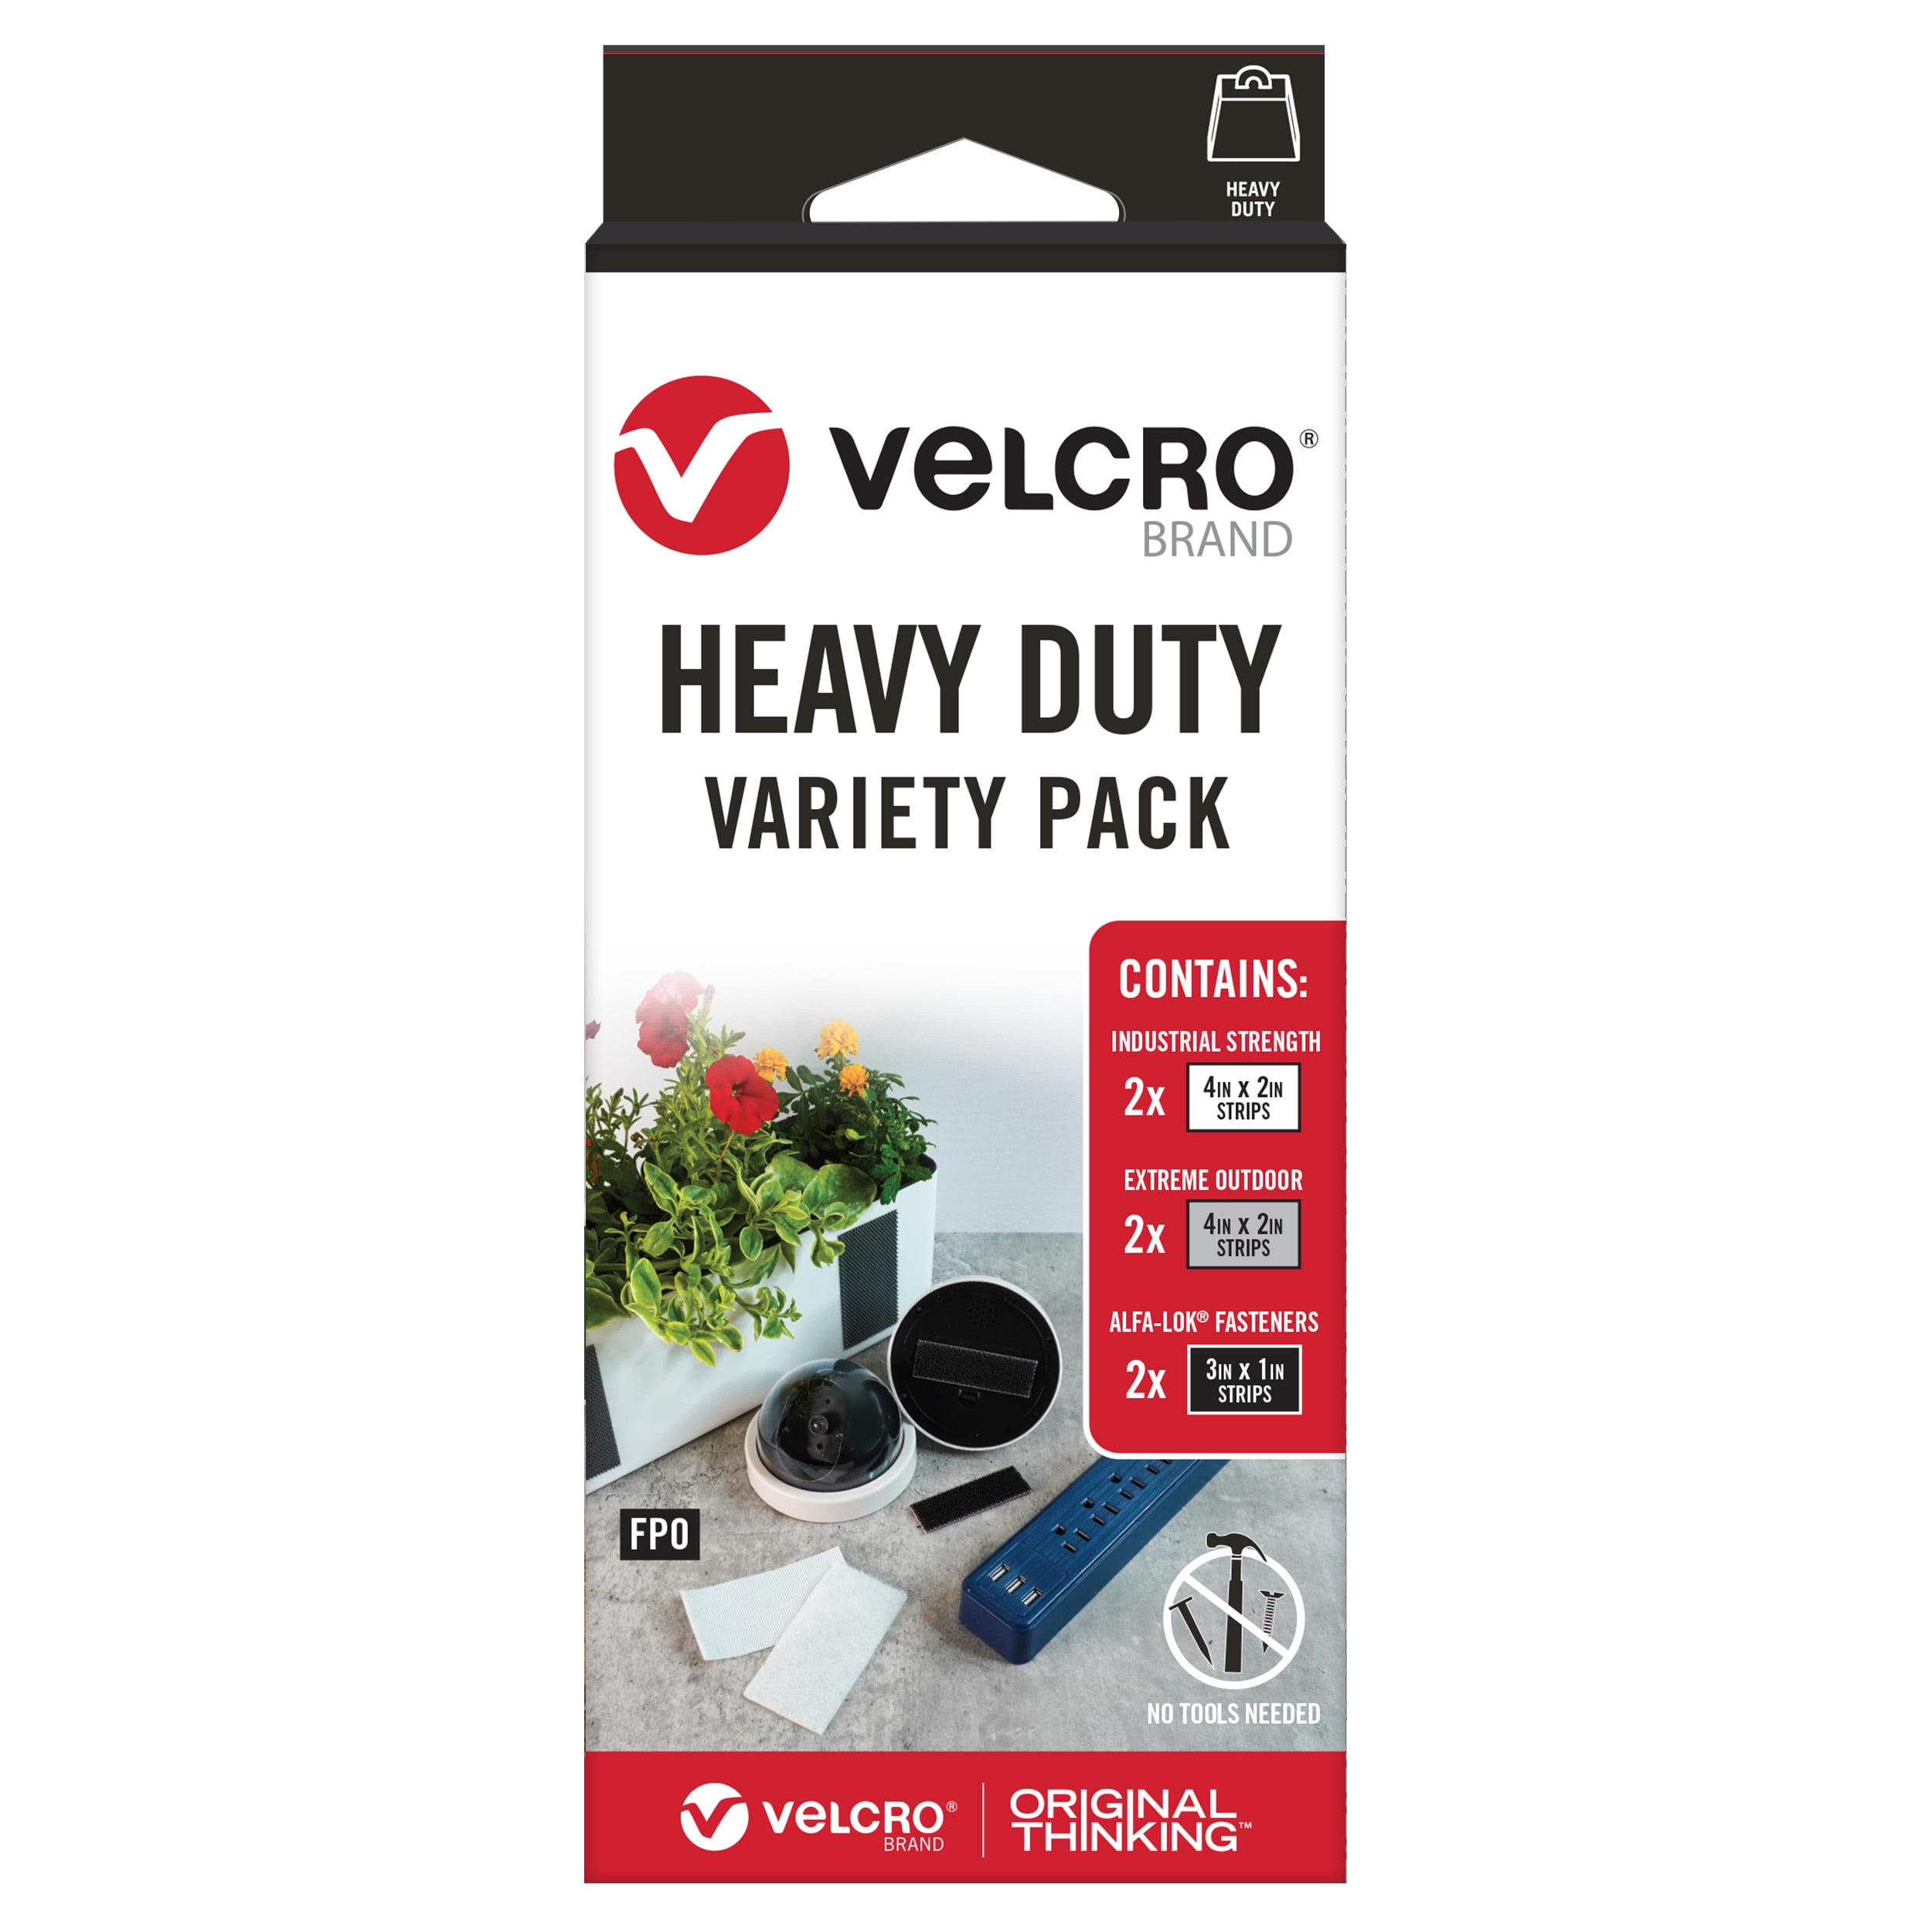 Velcro Heavy Duty Variety Pack - 1 Each